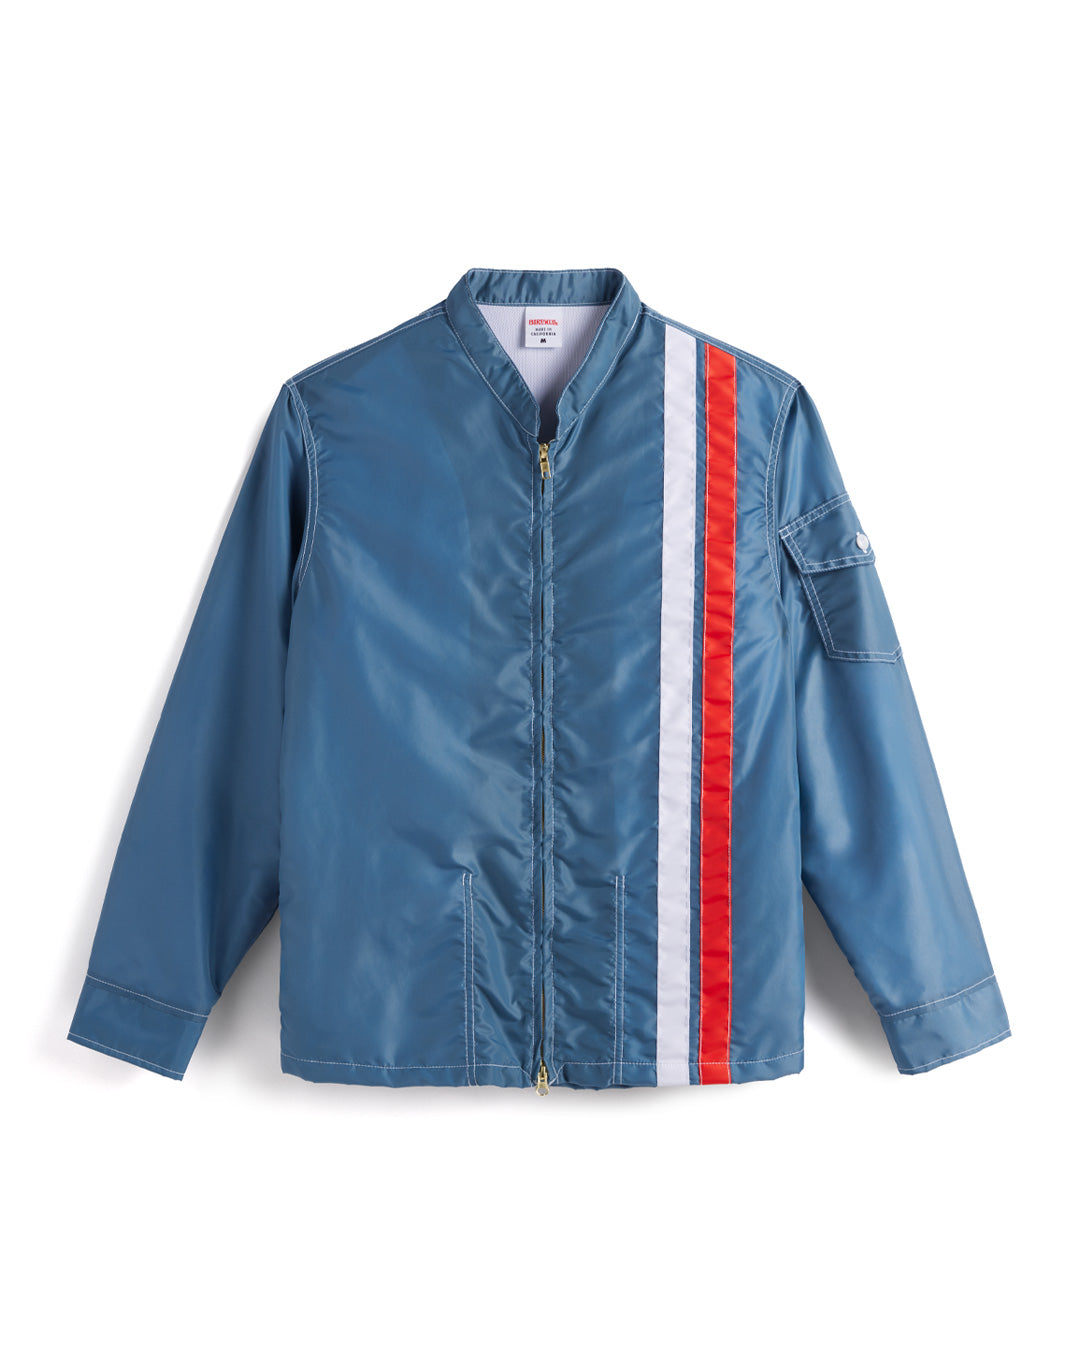 Birdwell Le Mans Racing Jacket - Federal Blue